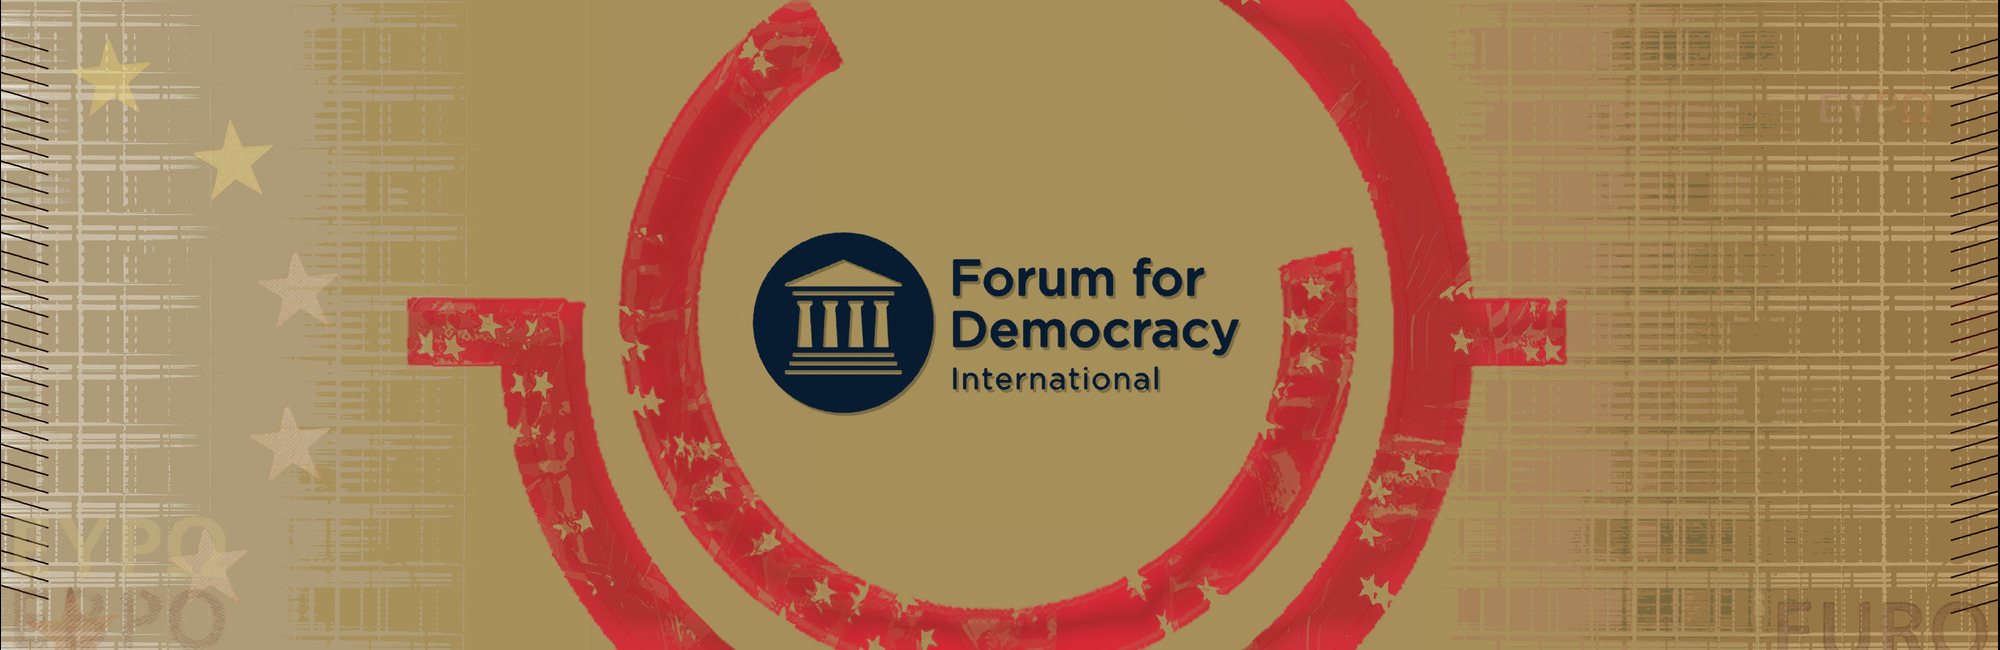 Forum for Democracy International